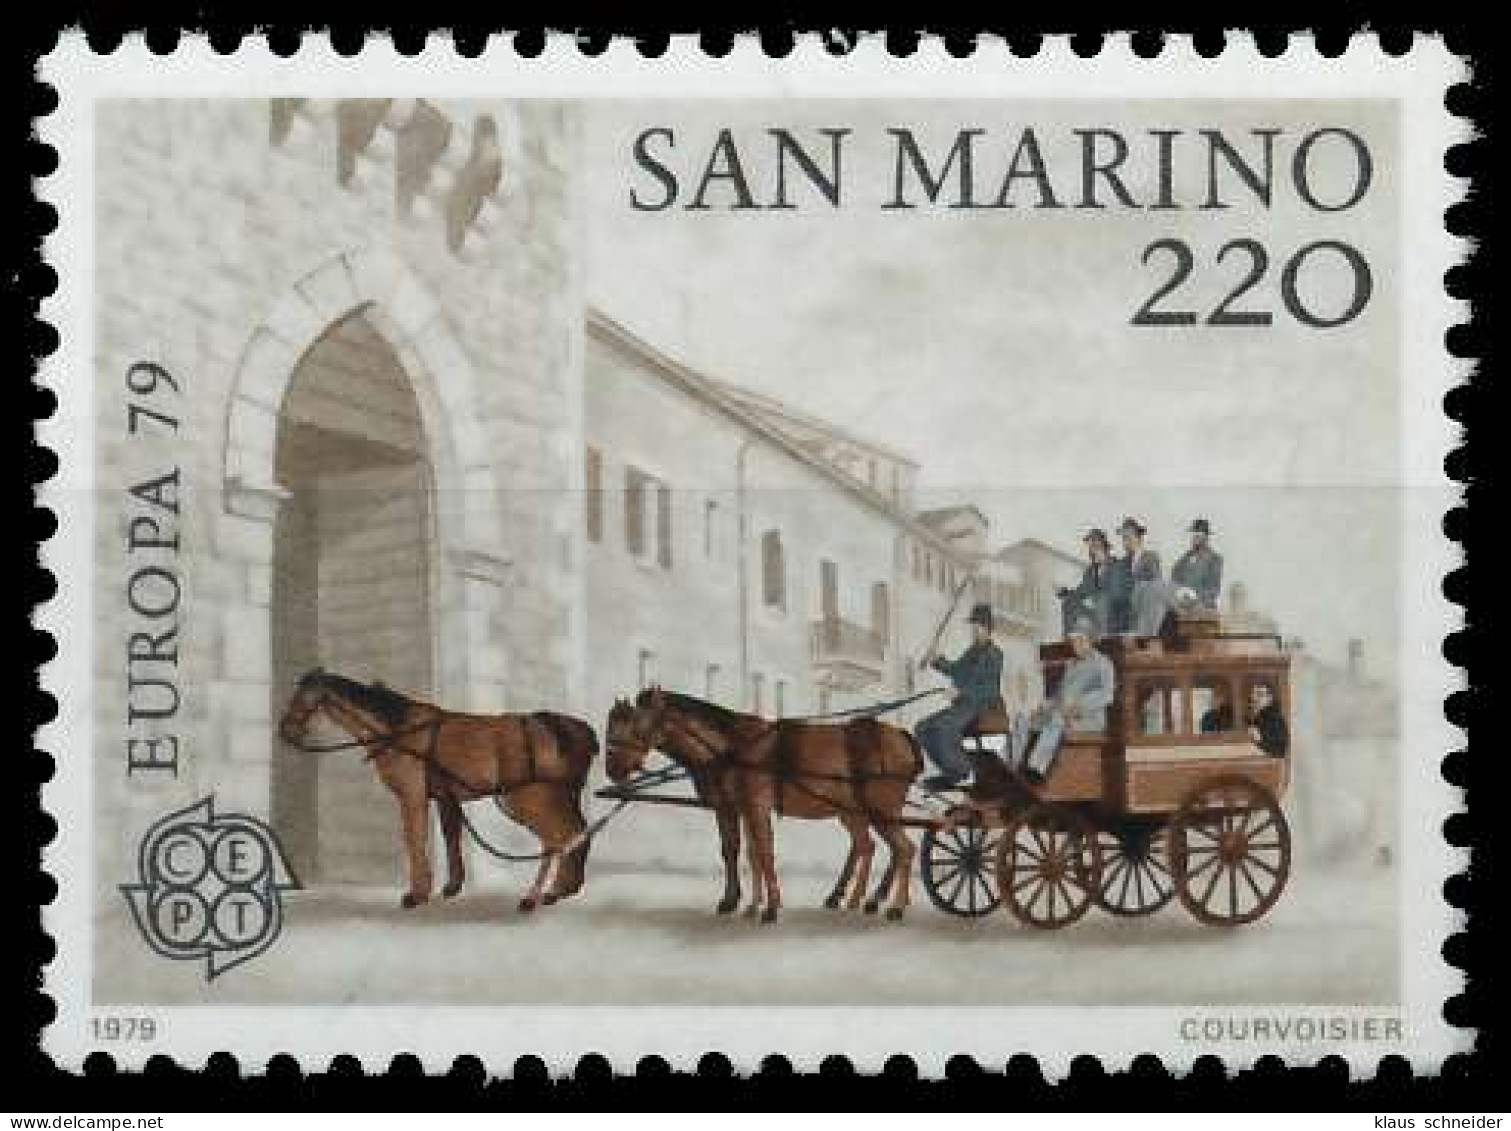 SAN MARINO 1979 Nr 1173 Postfrisch S1B2FE2 - Unused Stamps